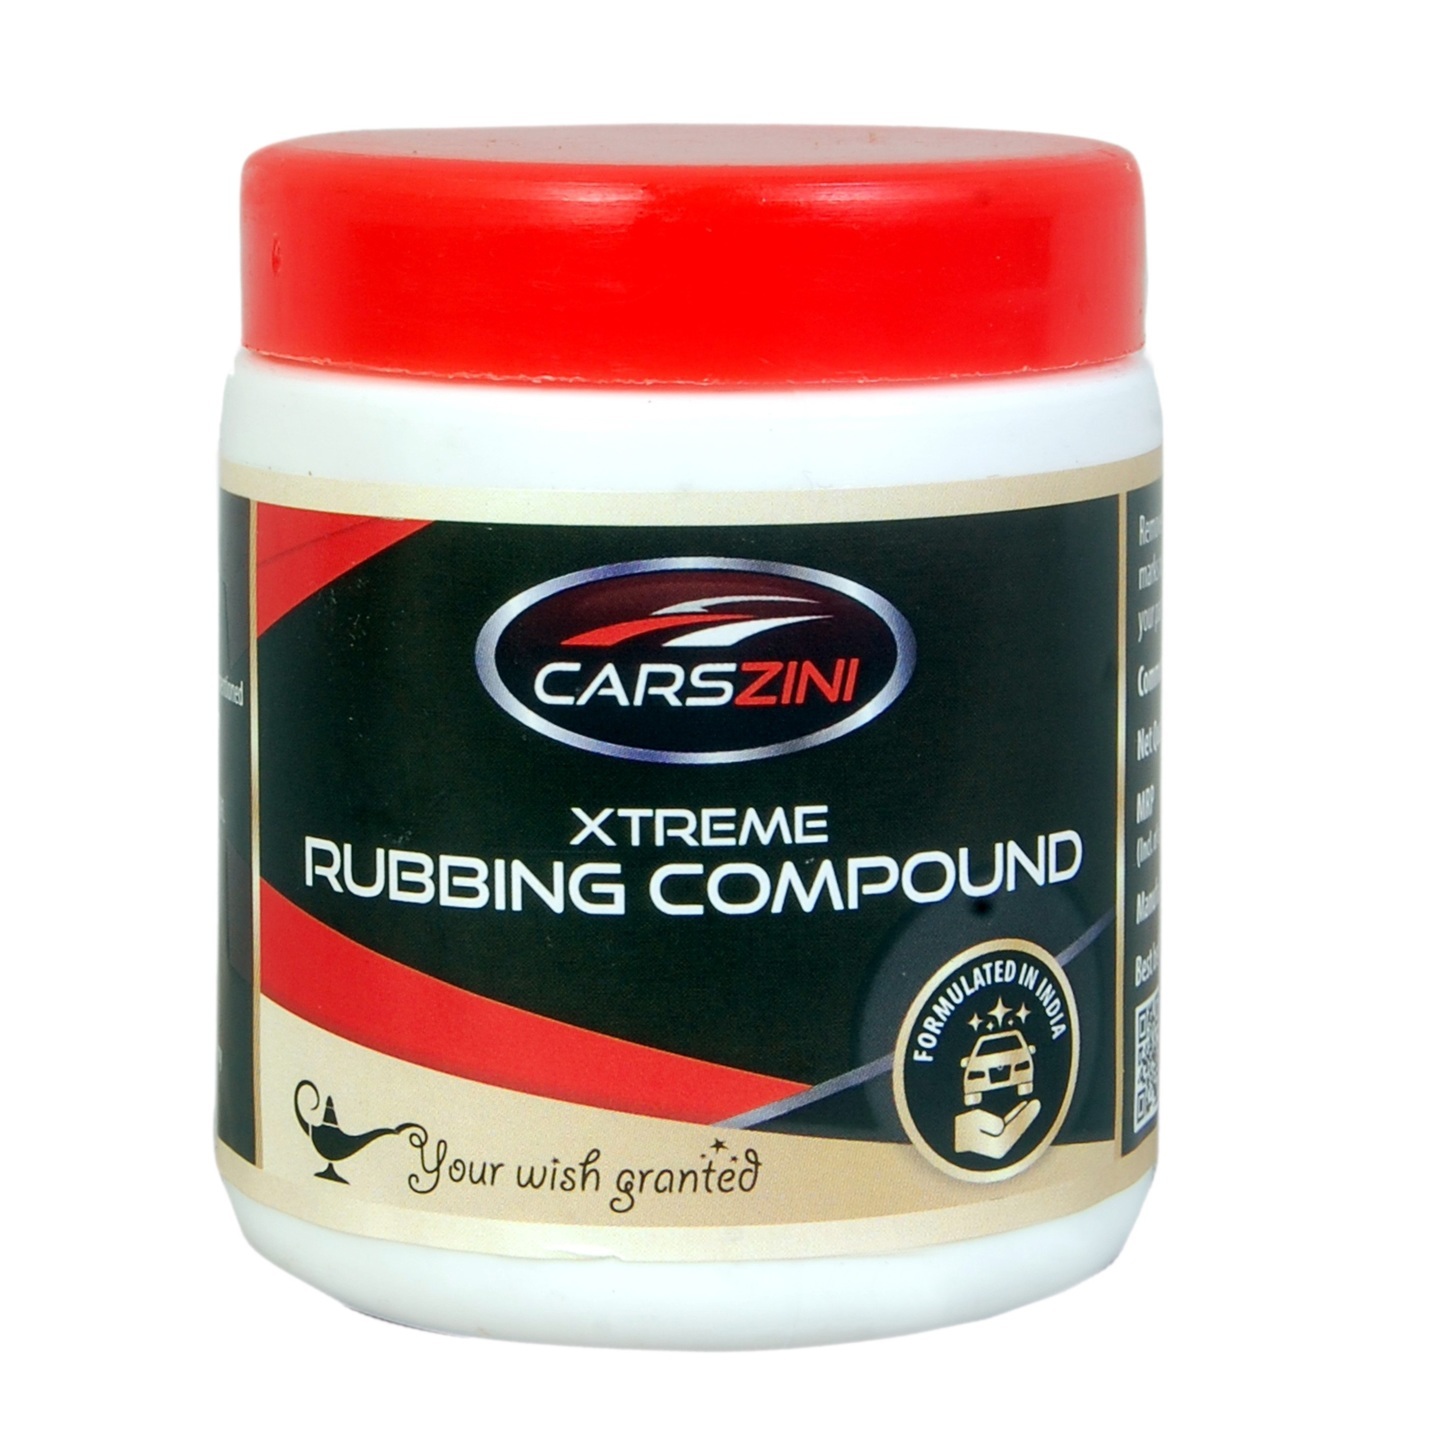 CARSZINI Rubbing Compound 100 g